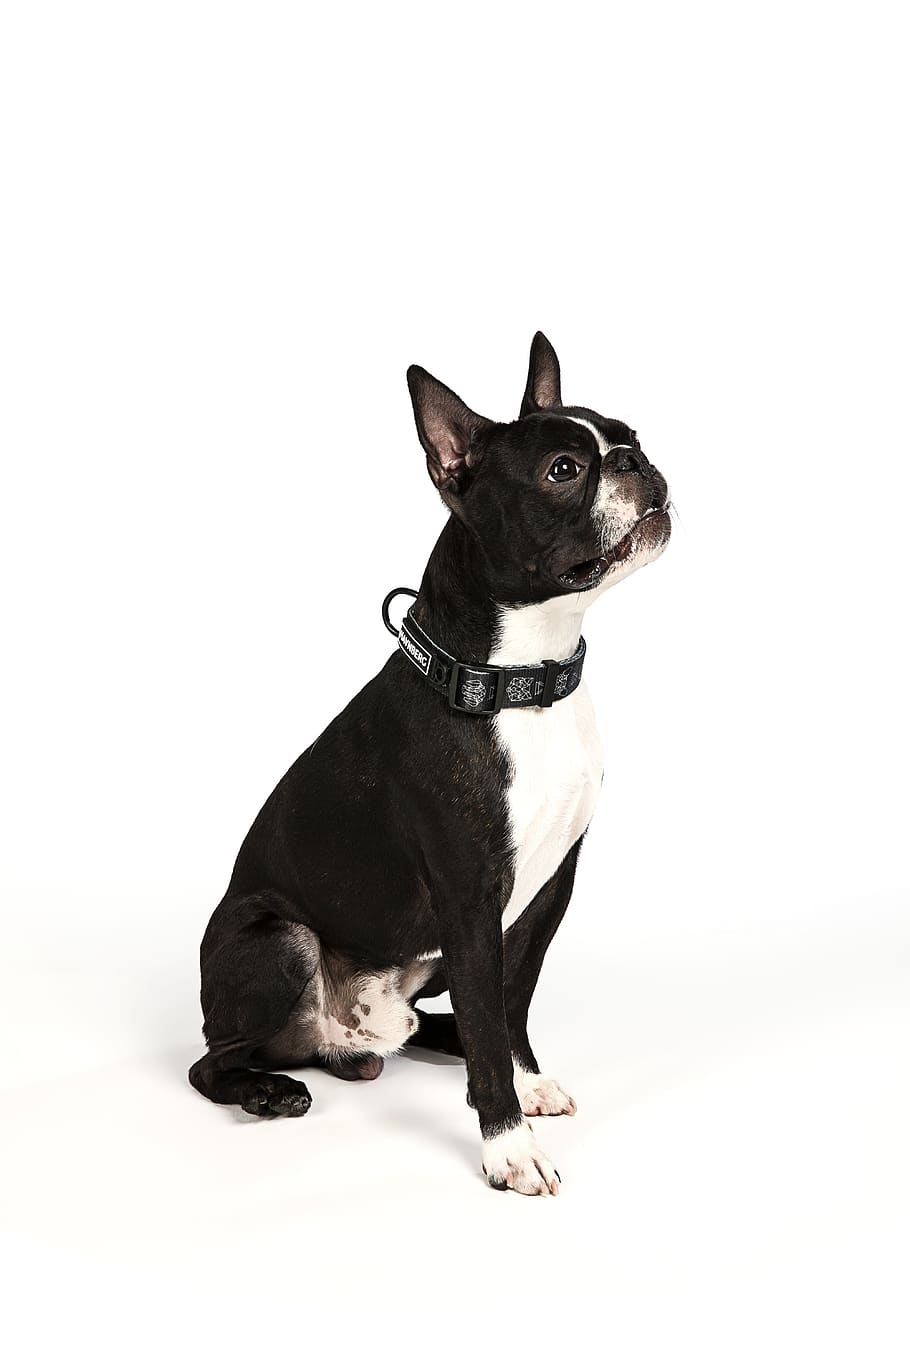 boston terrier, dog, terrier, cute, animal, puppy, thoroughbreds, portrait, adorable, pets